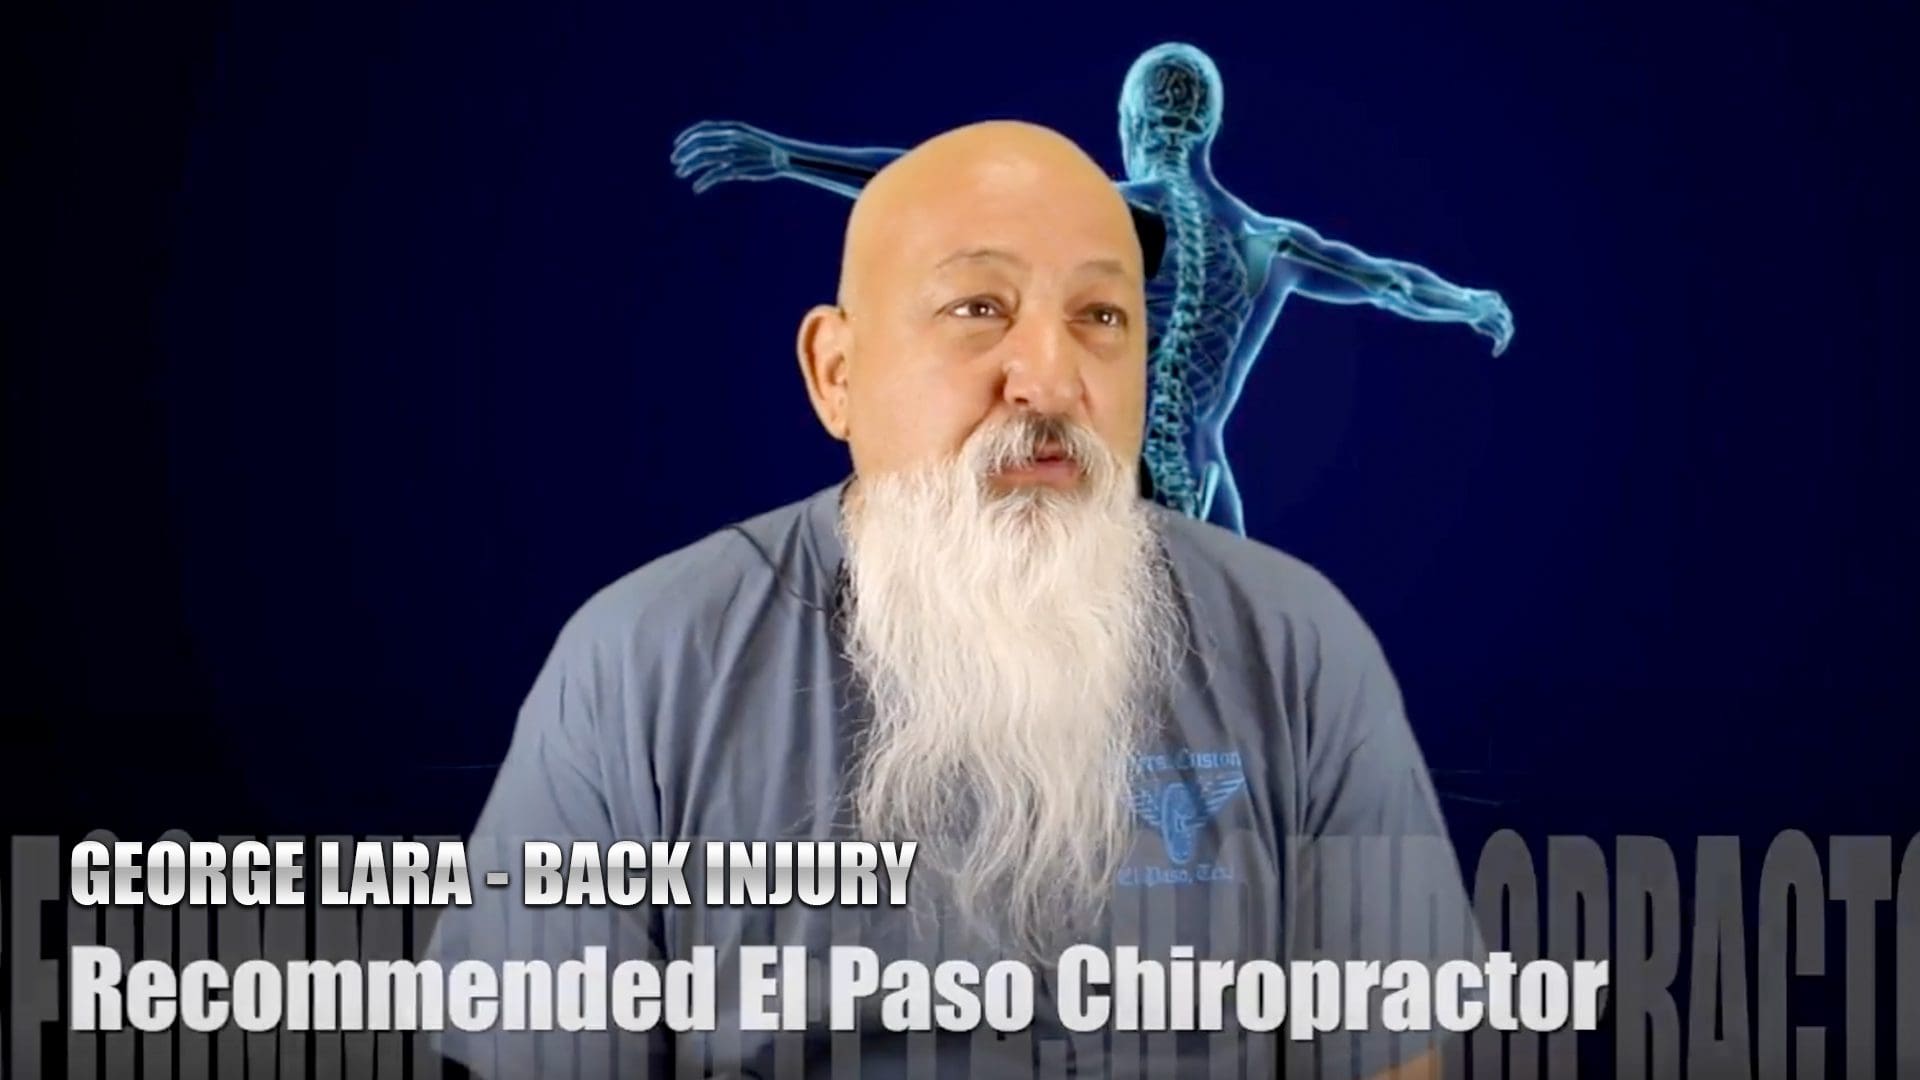 Chiropractor Near Me | Video | El Paso, TX Kiropraktika doktor